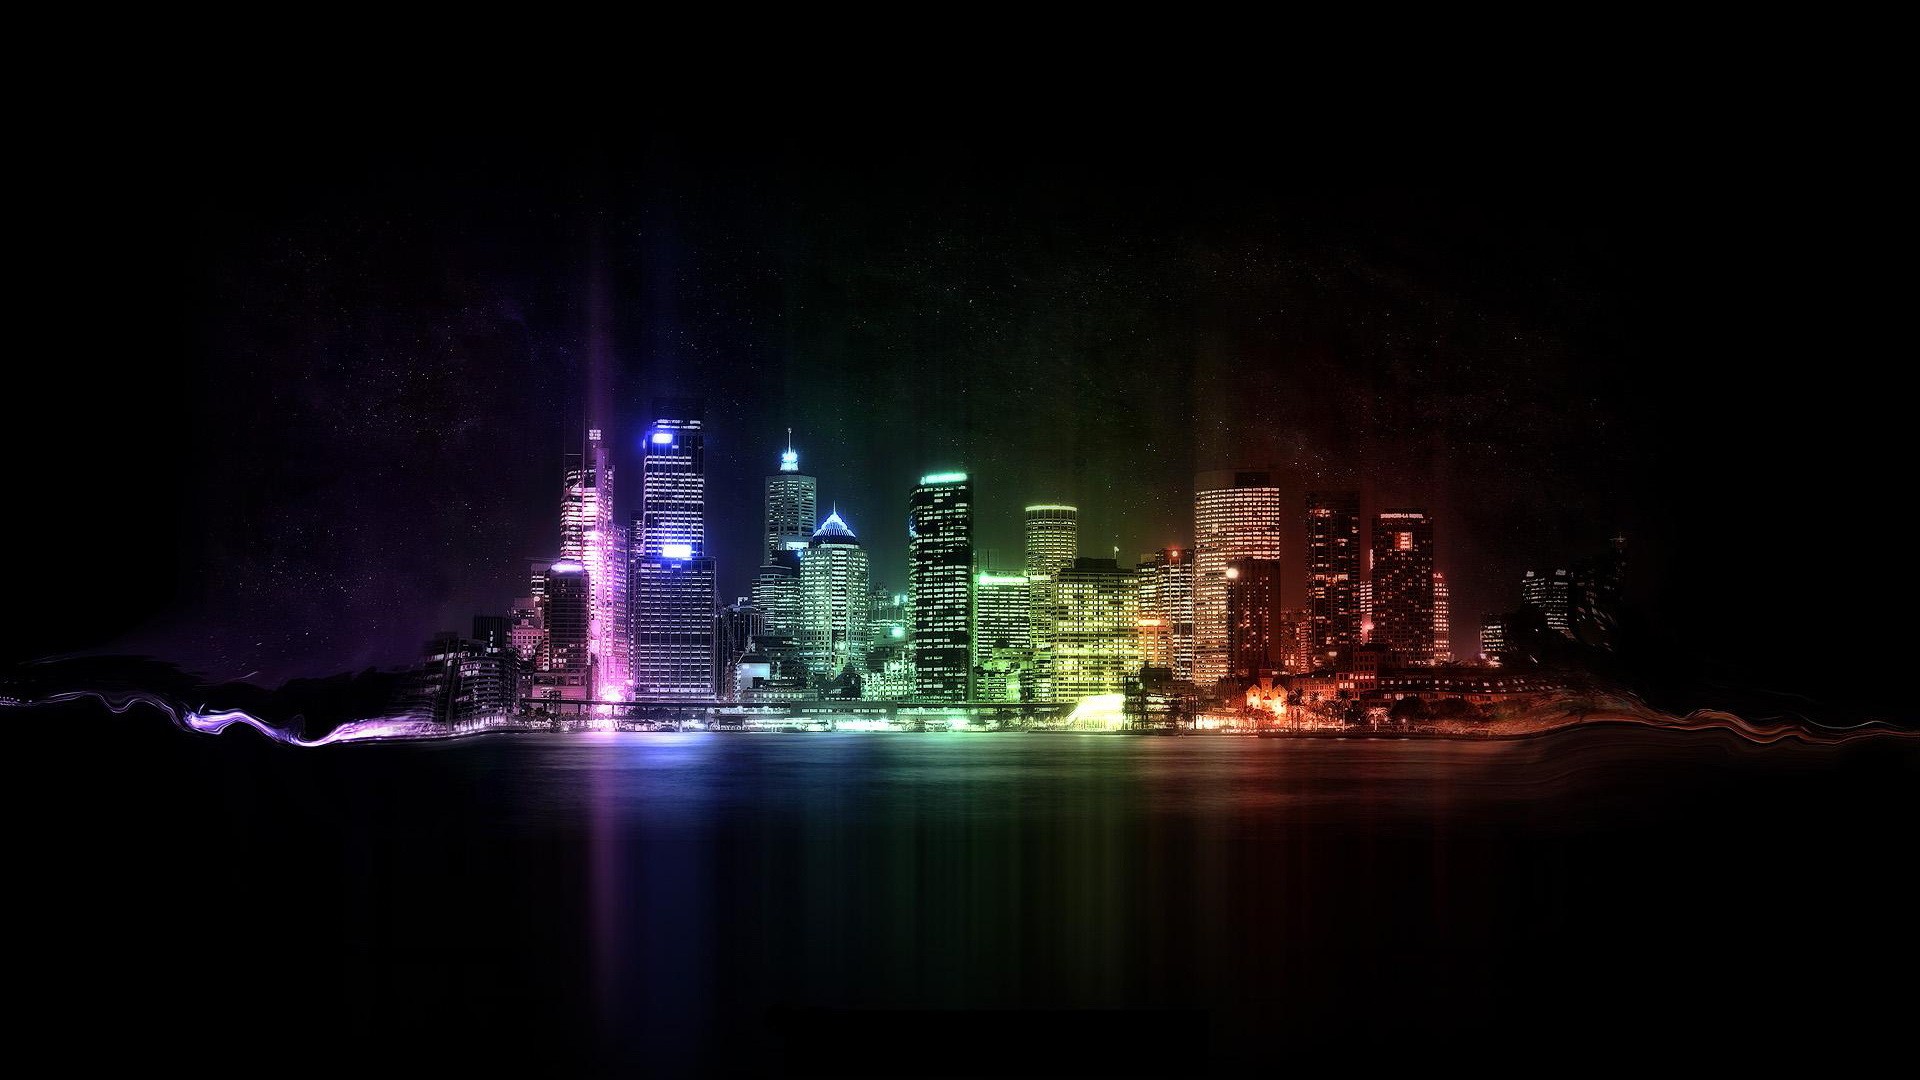 General 1920x1080 city cityscape New York City neon skyline digital art city lights